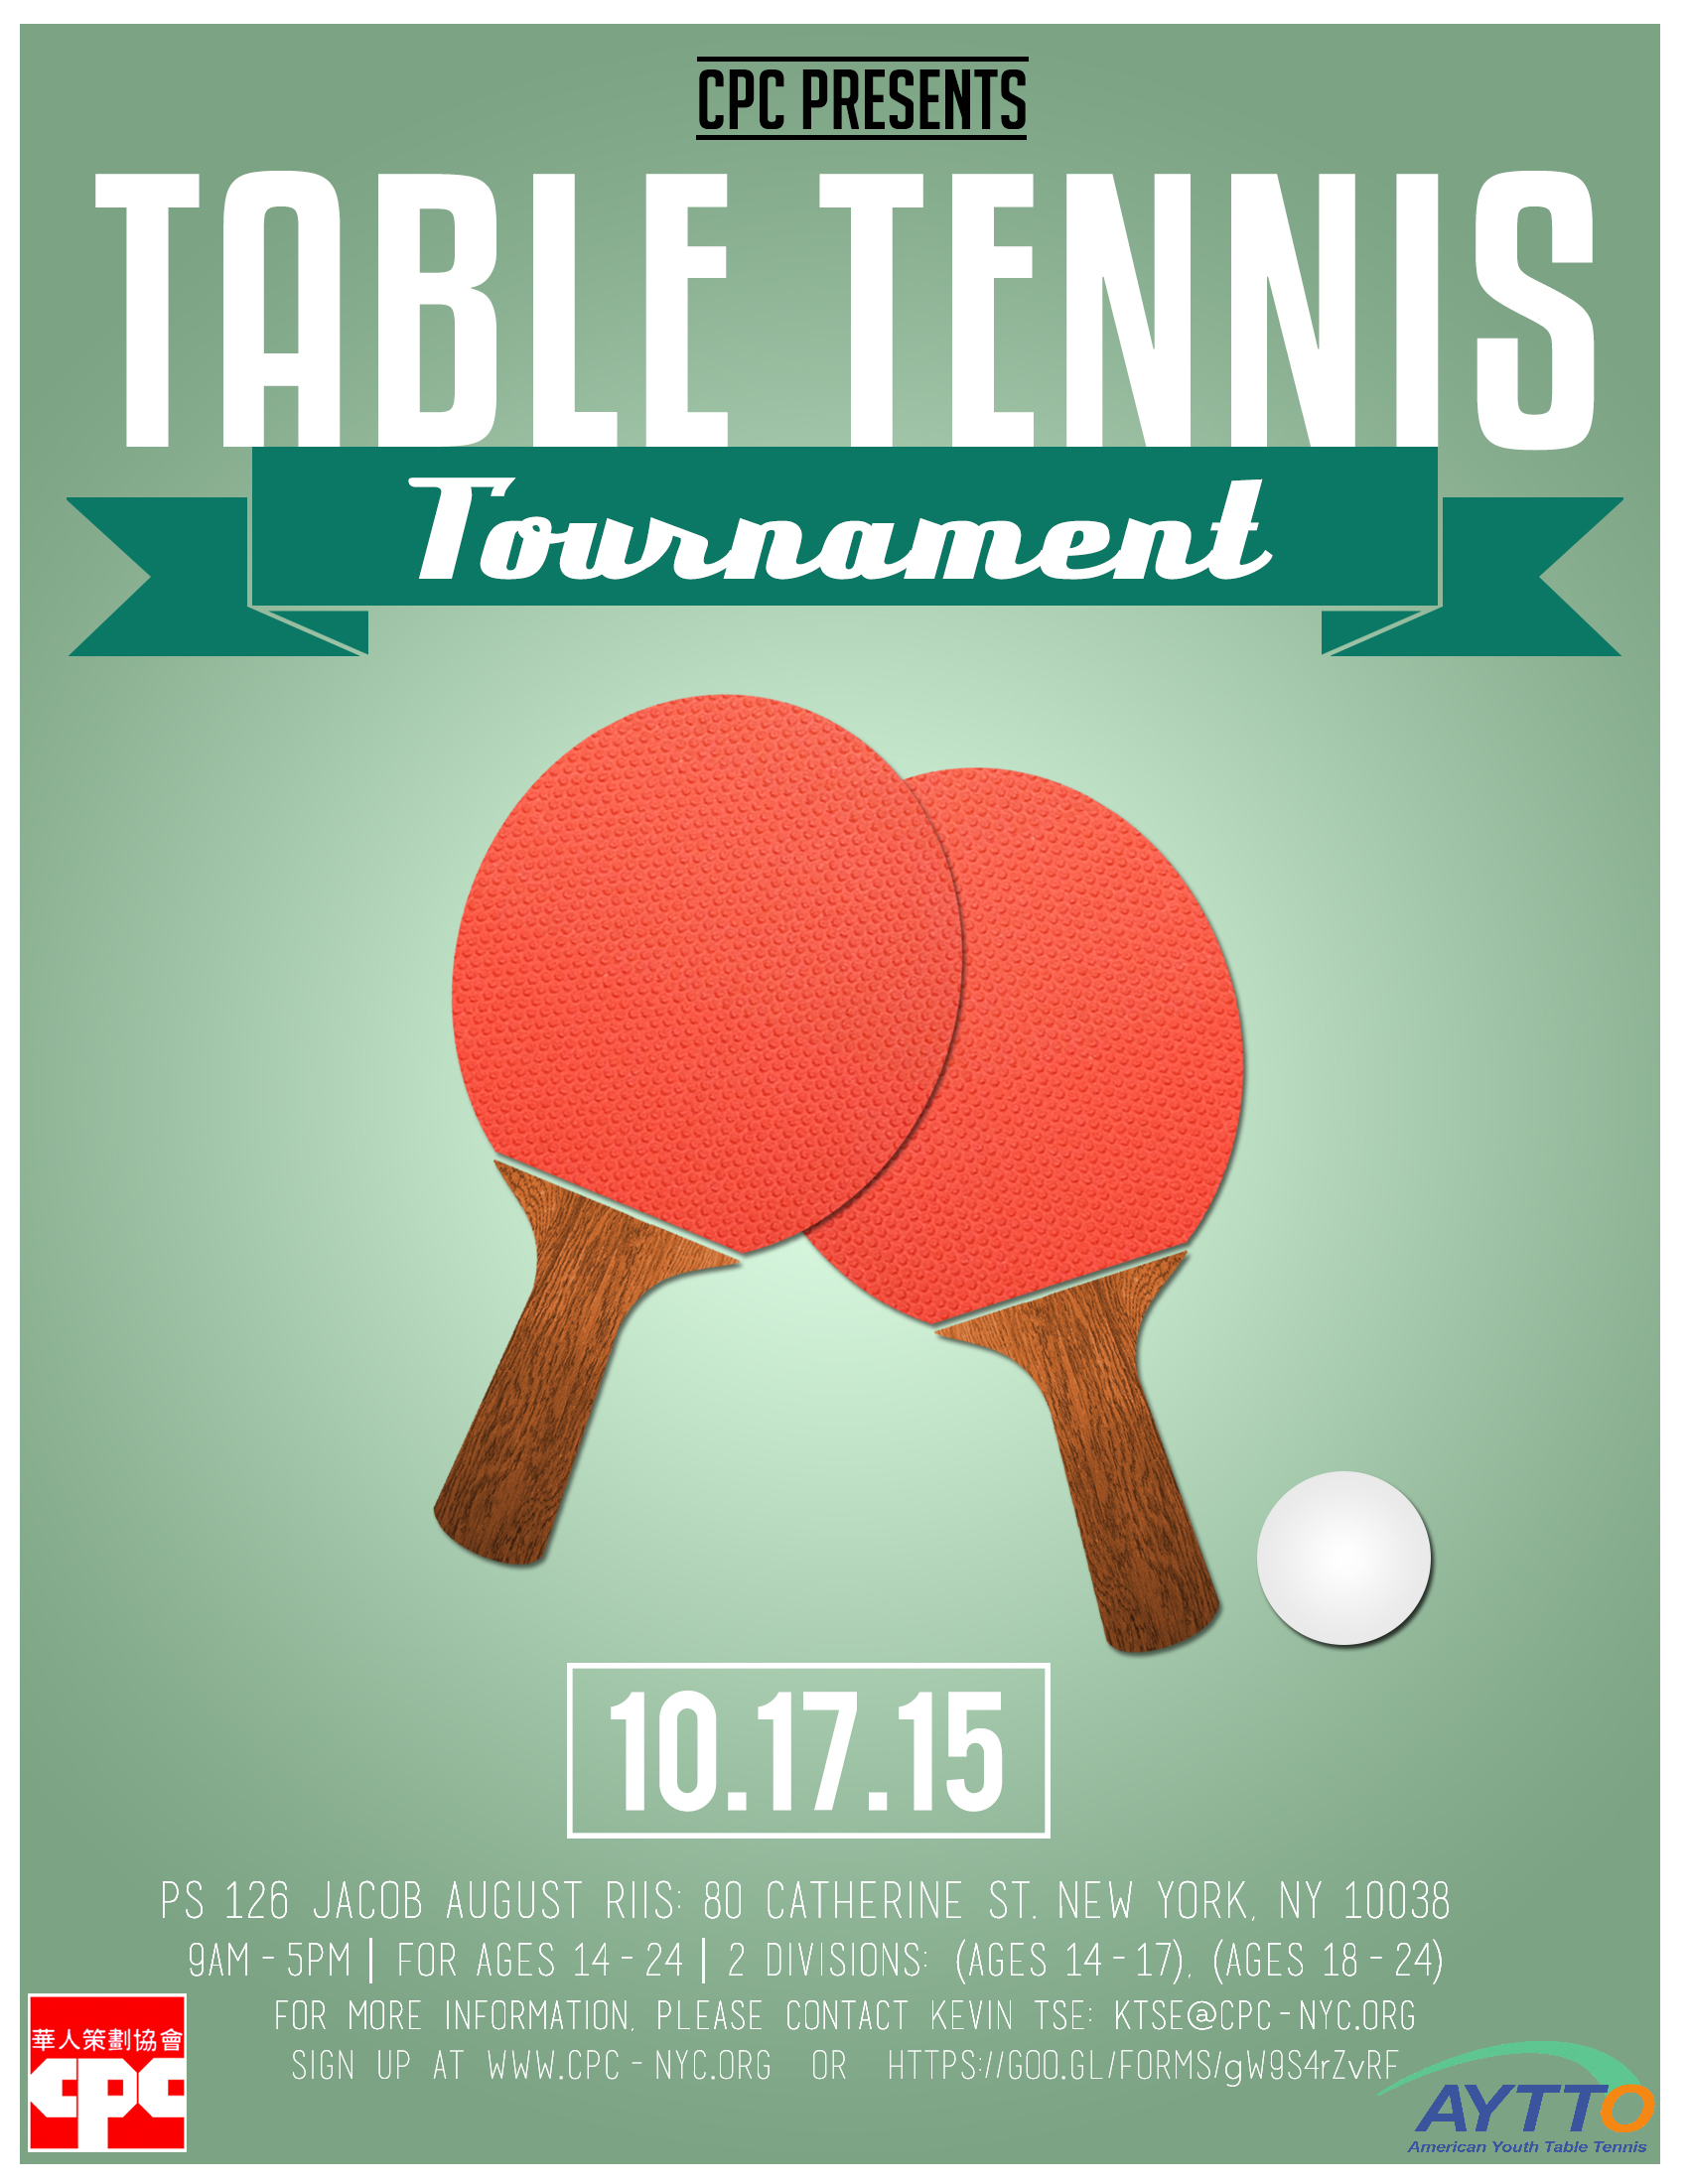 CPC Table Tennis Tournament Flyer 10.17.15 0 